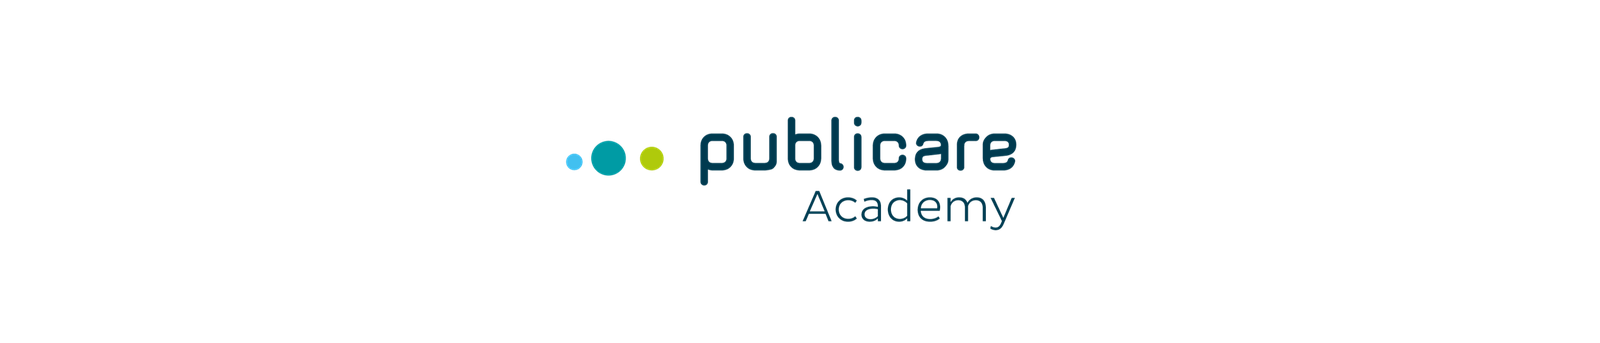 Publicare_Academy_Teaser.png